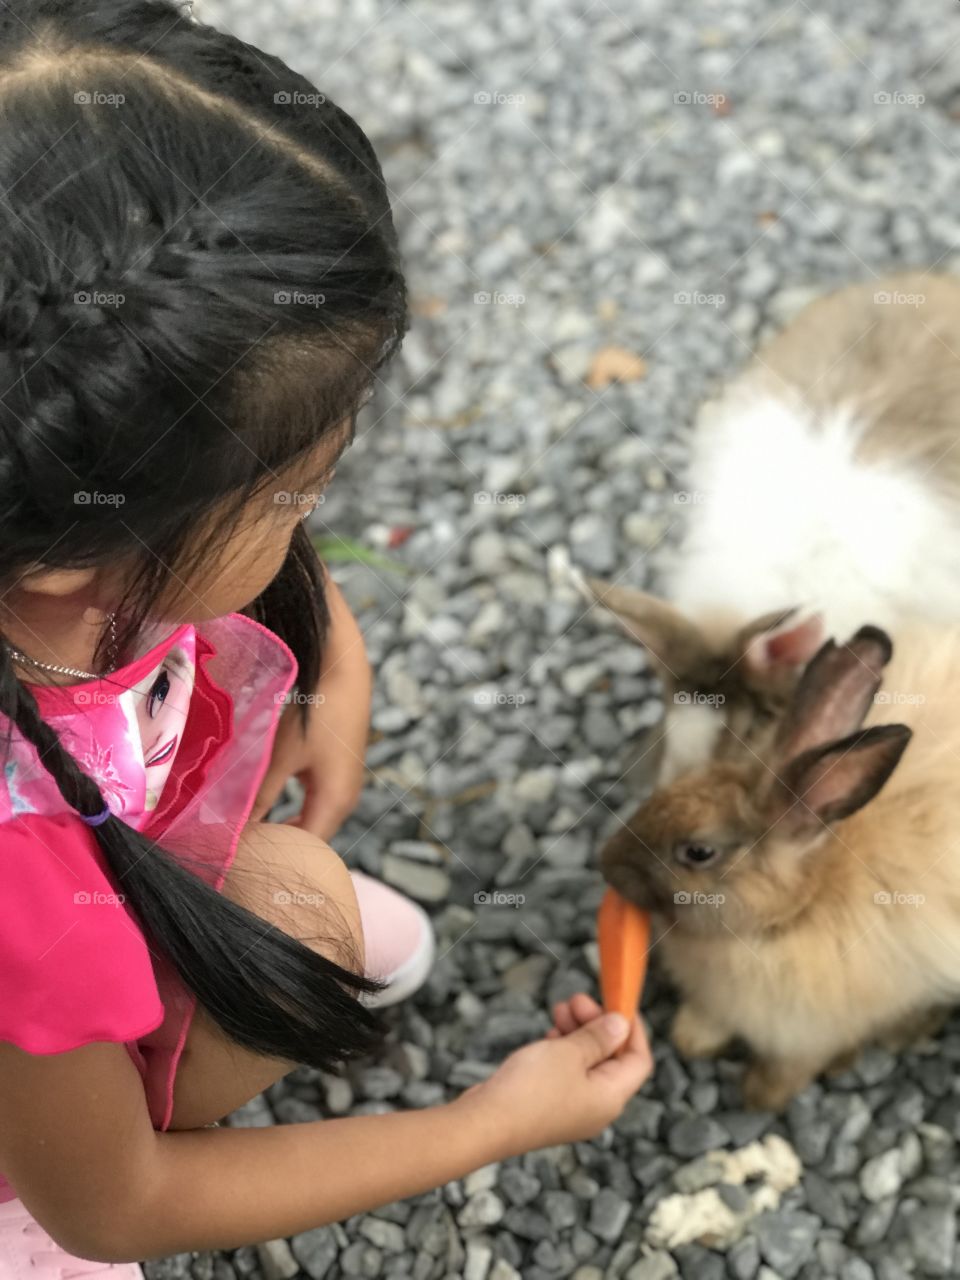 Feeding a rabbit.